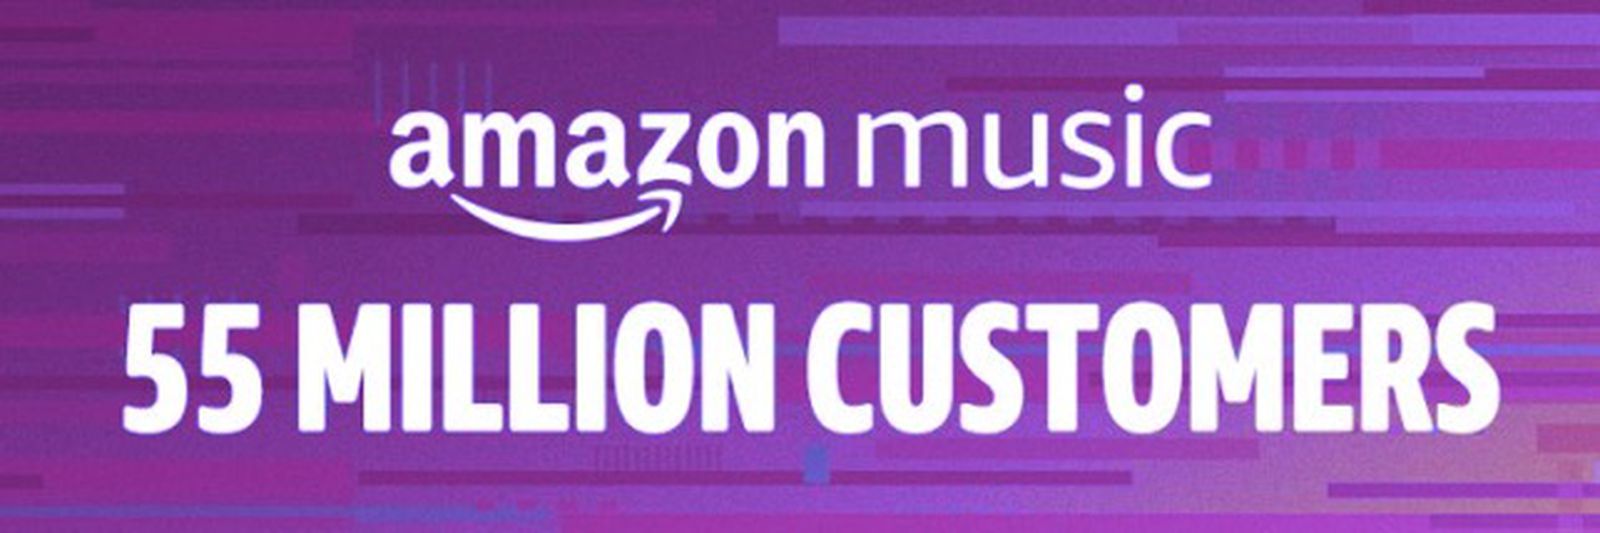 amazon music unsubscribe